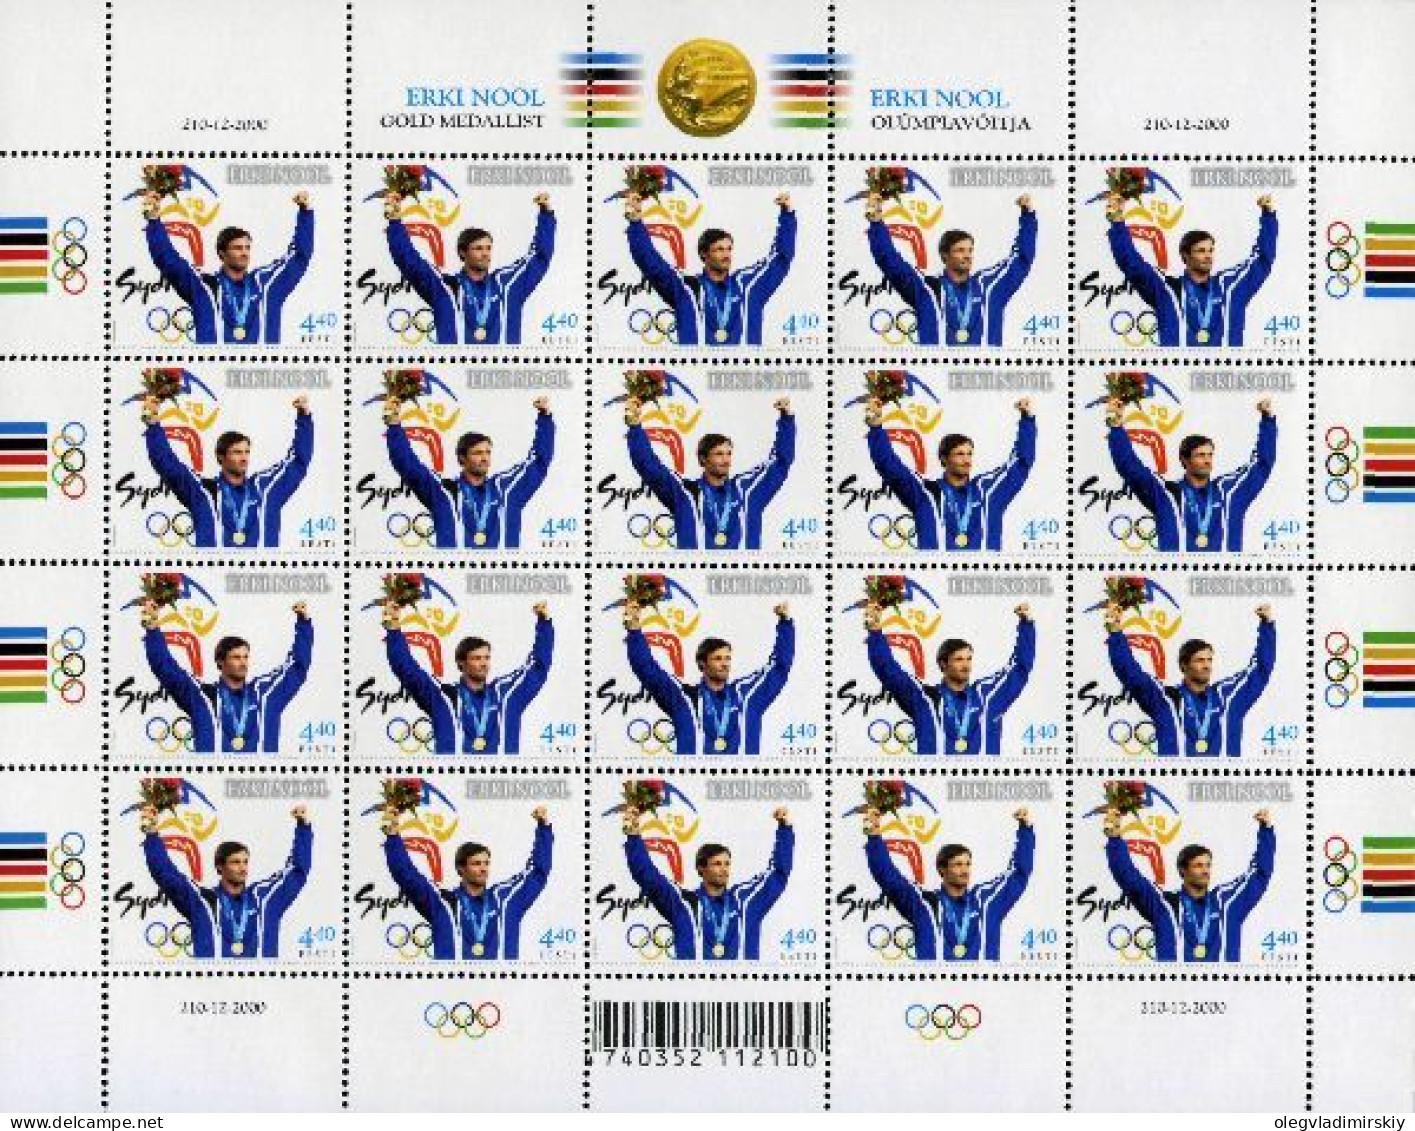 Estonia Estland Estonie 2001 Olympic Champion Erki Nool Sydney Summer Olympics Sheetlet MNH - Estate 2000: Sydney - Paralympic